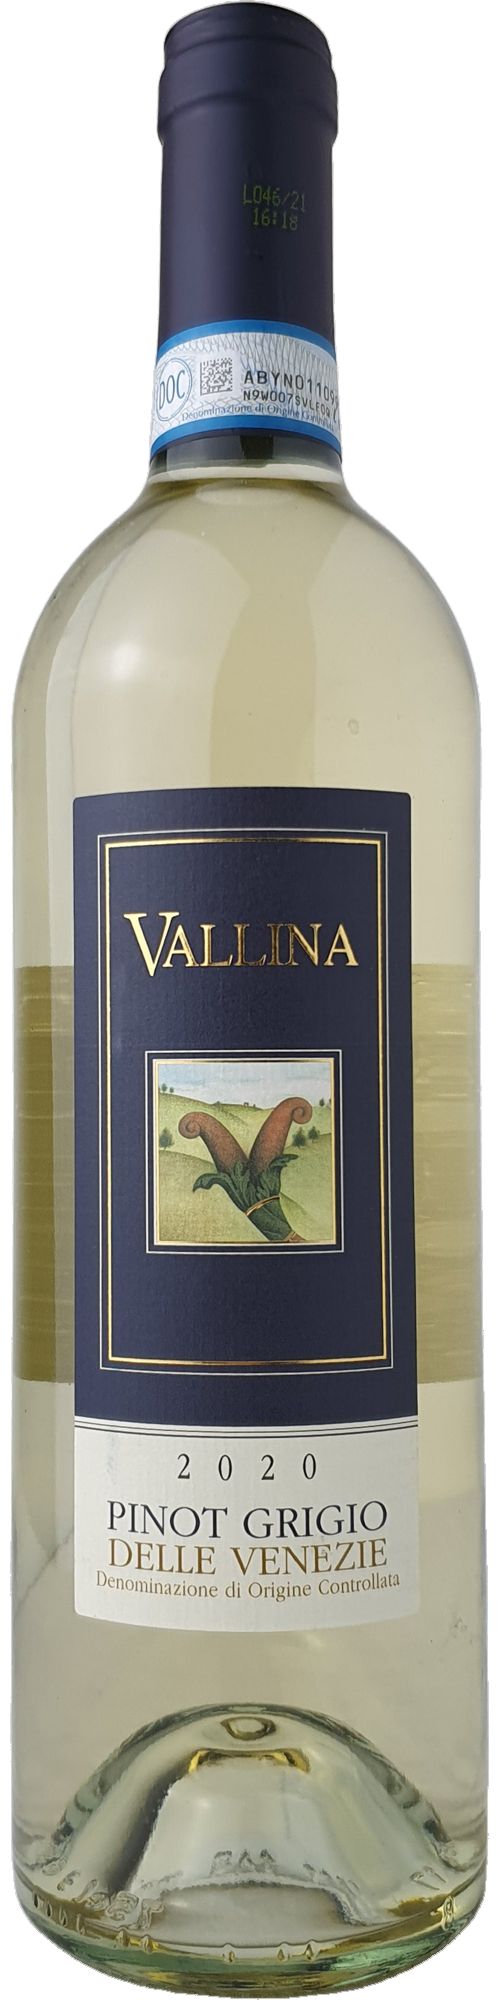 Vallina Pinot Grigio delle Venezie DOC